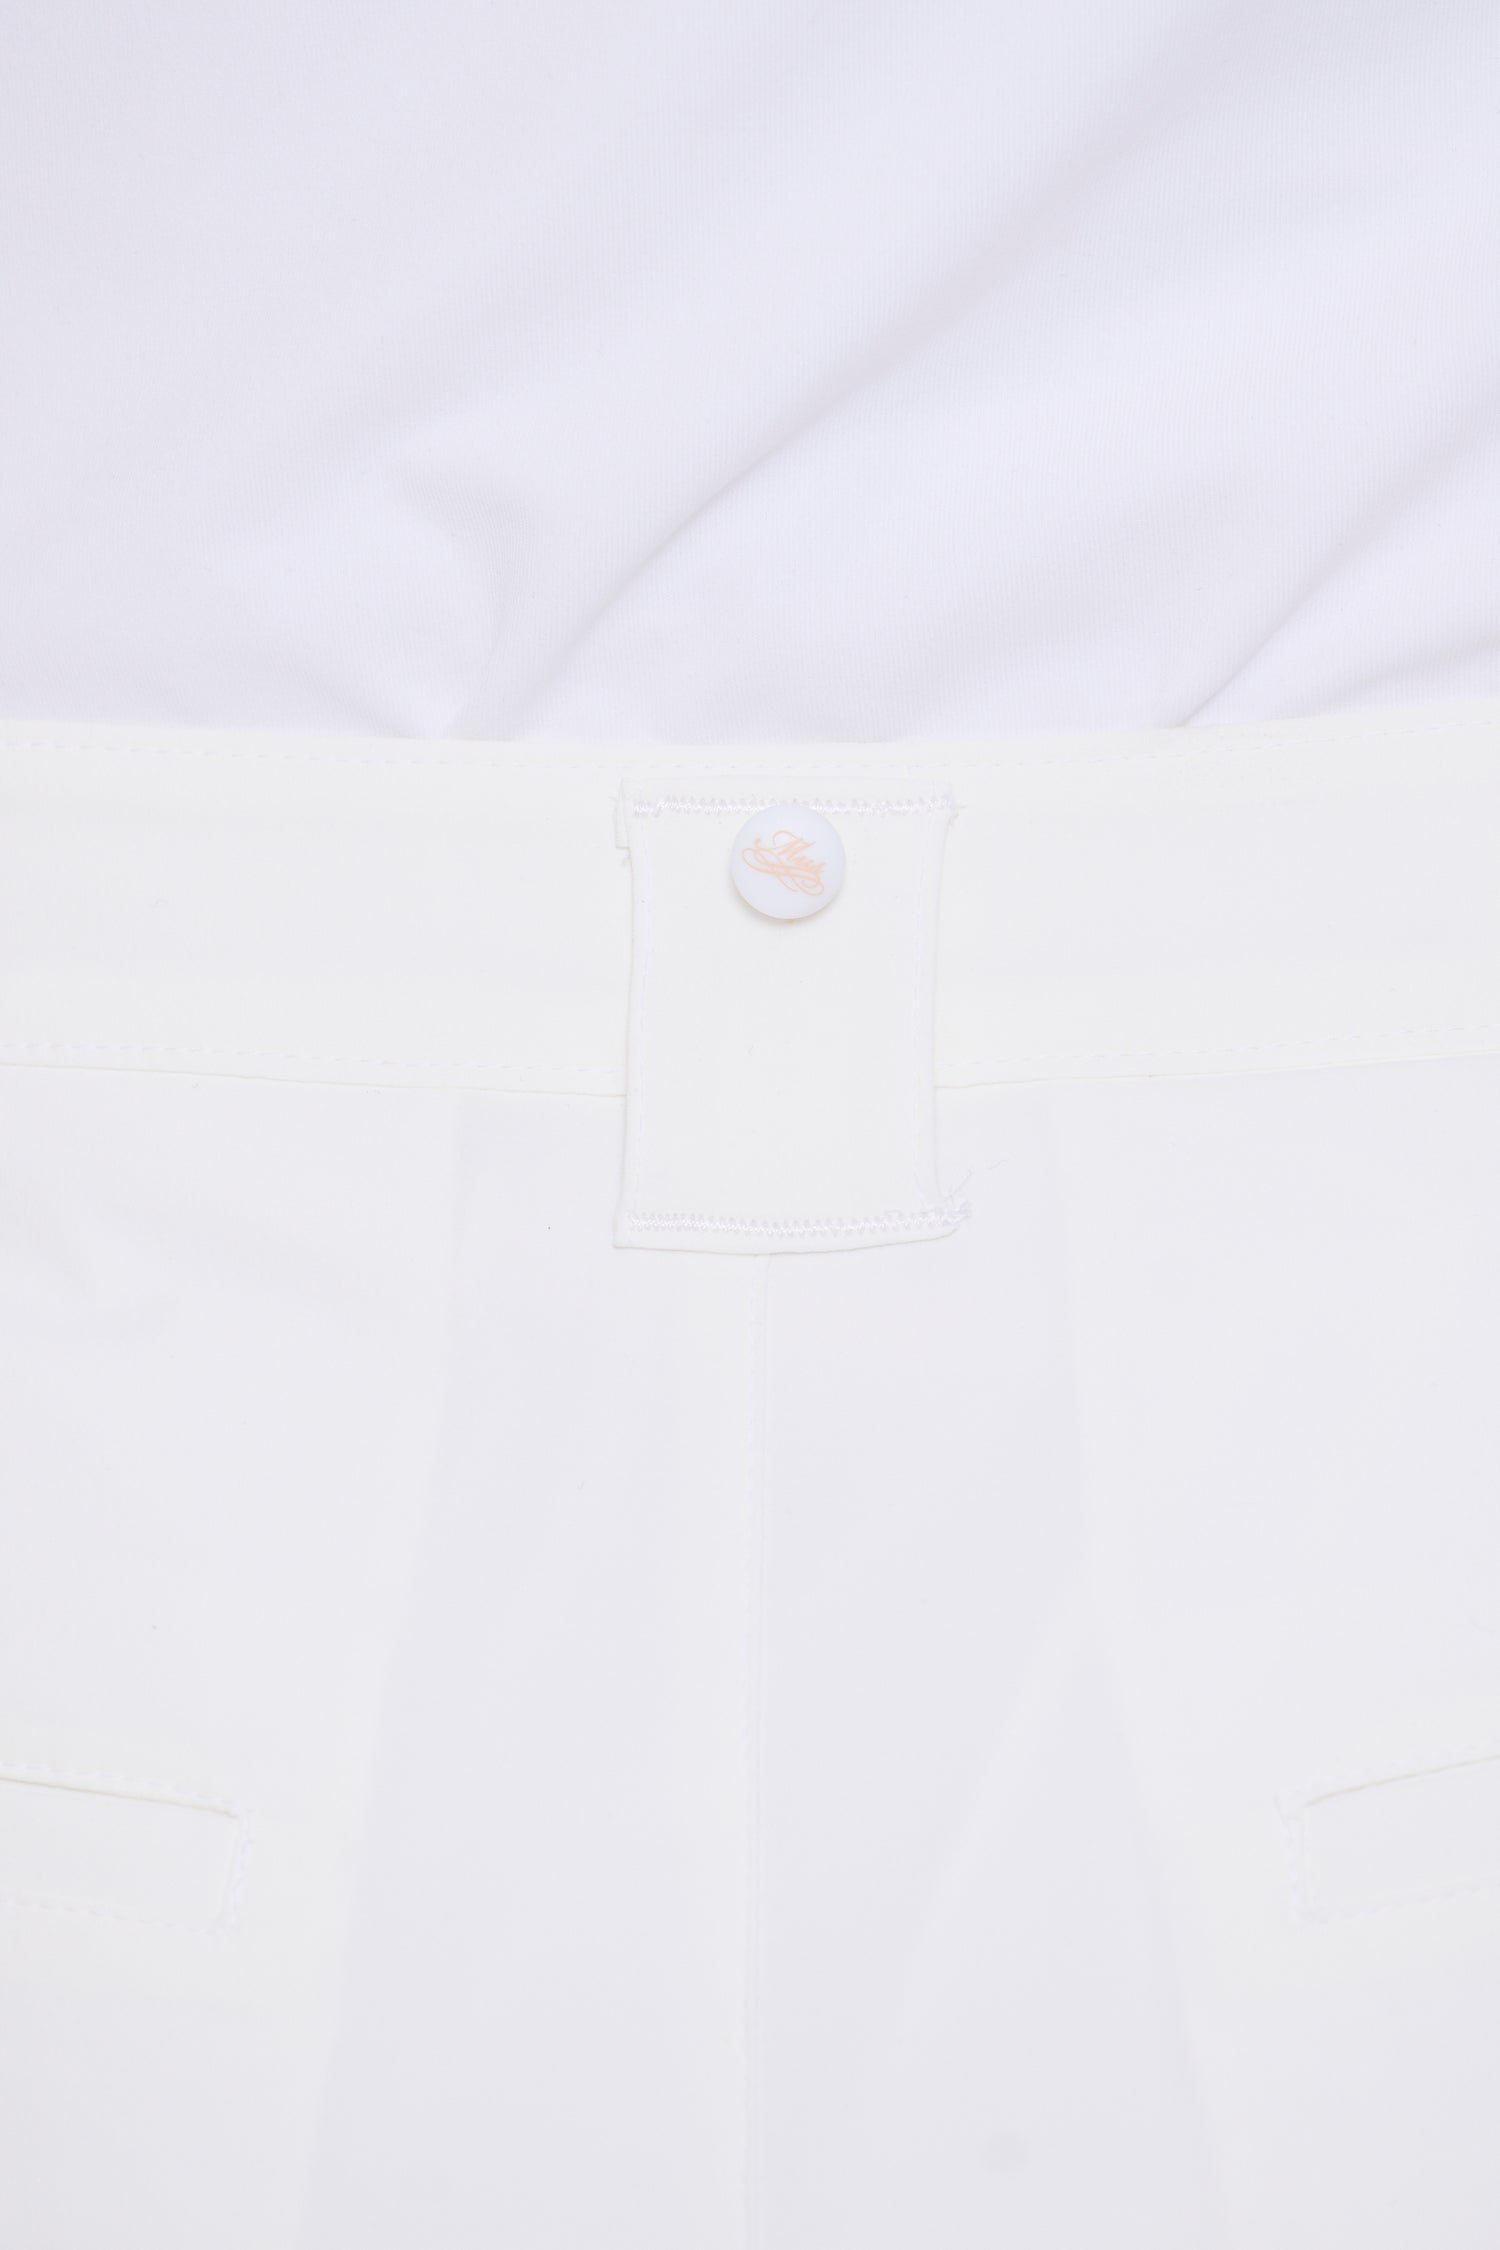 Sporty bicolor shorts (801H2554)